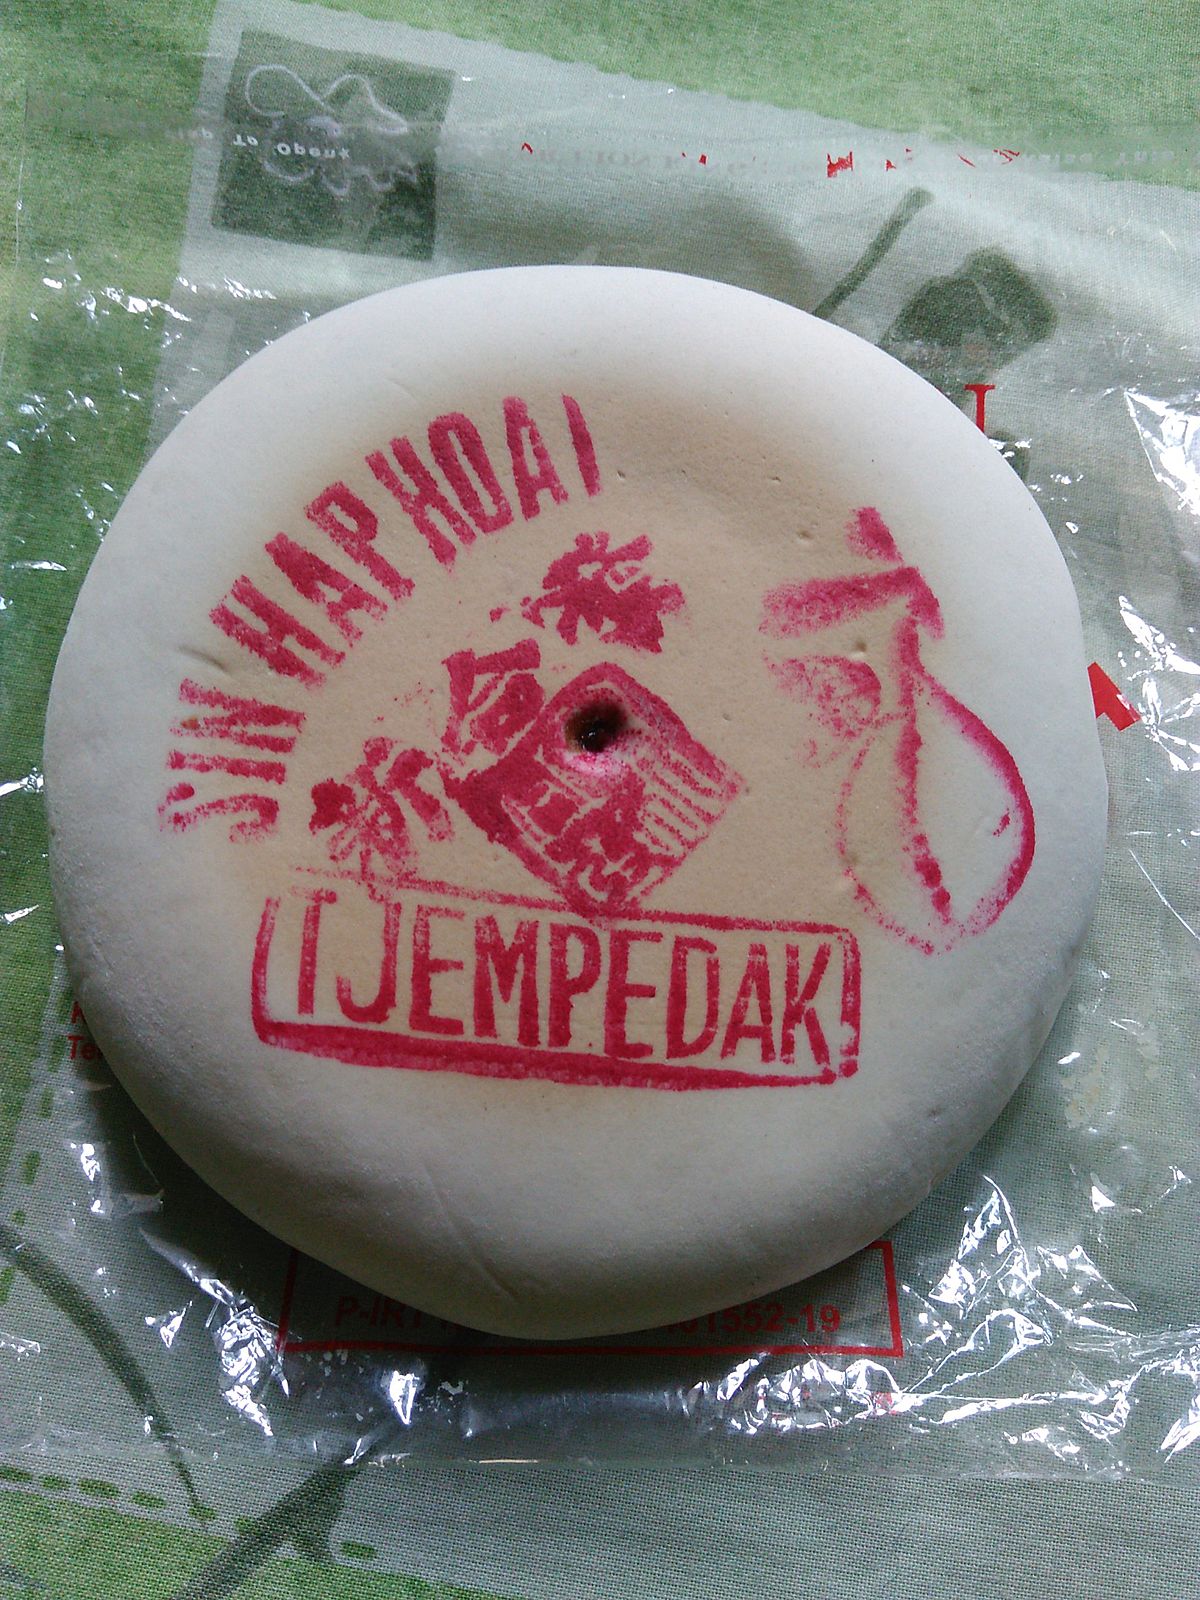  Kue  bulan  Wikipedia bahasa Indonesia ensiklopedia bebas